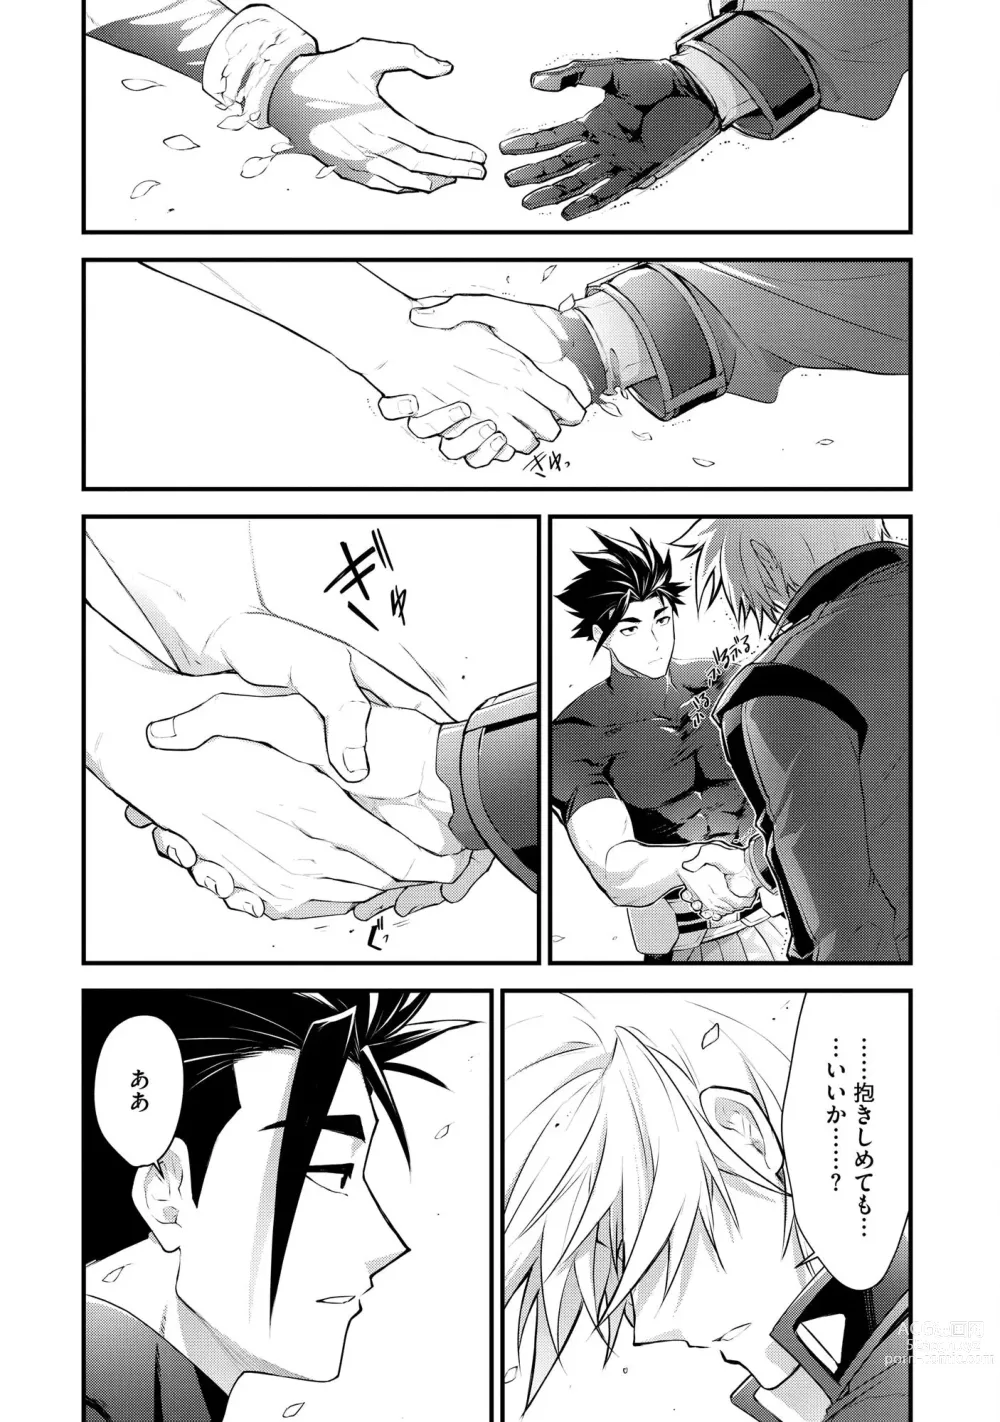 Page 184 of manga Haiboku Eiyuu, Ryoujoku